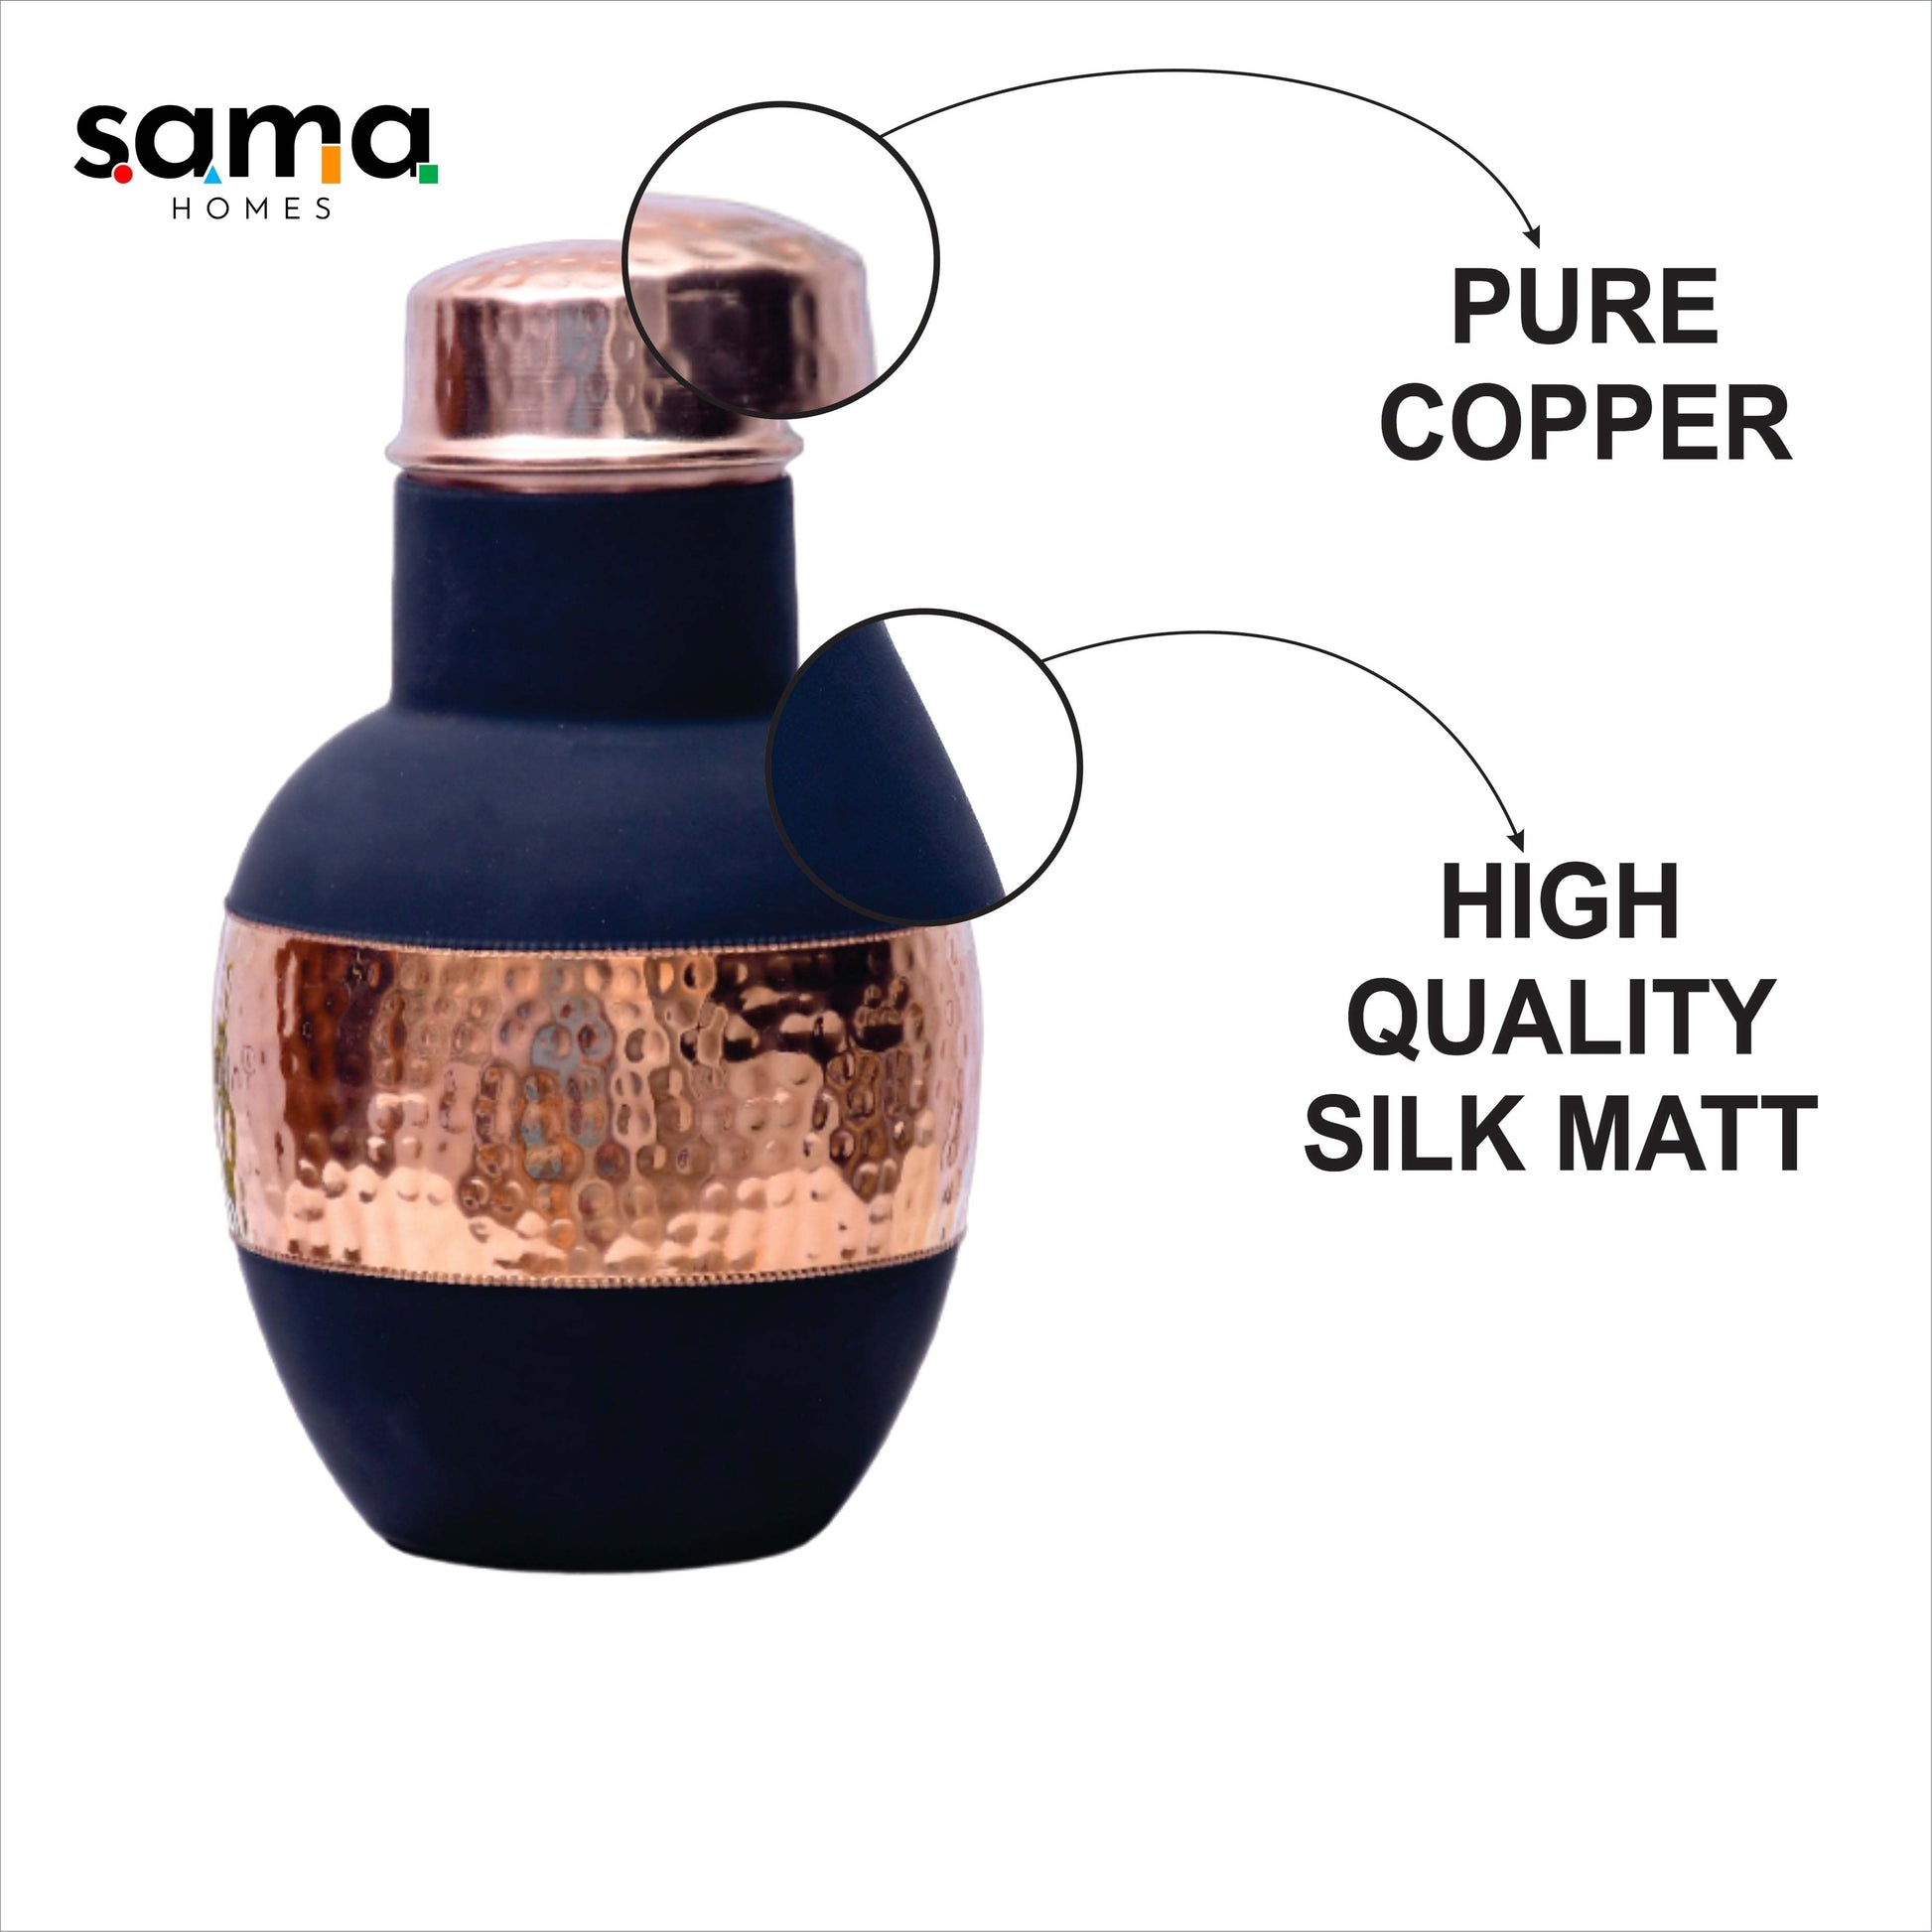 SAMA Homes - pure copper silk black apple pot with inbuilt glass capacity 1200ml